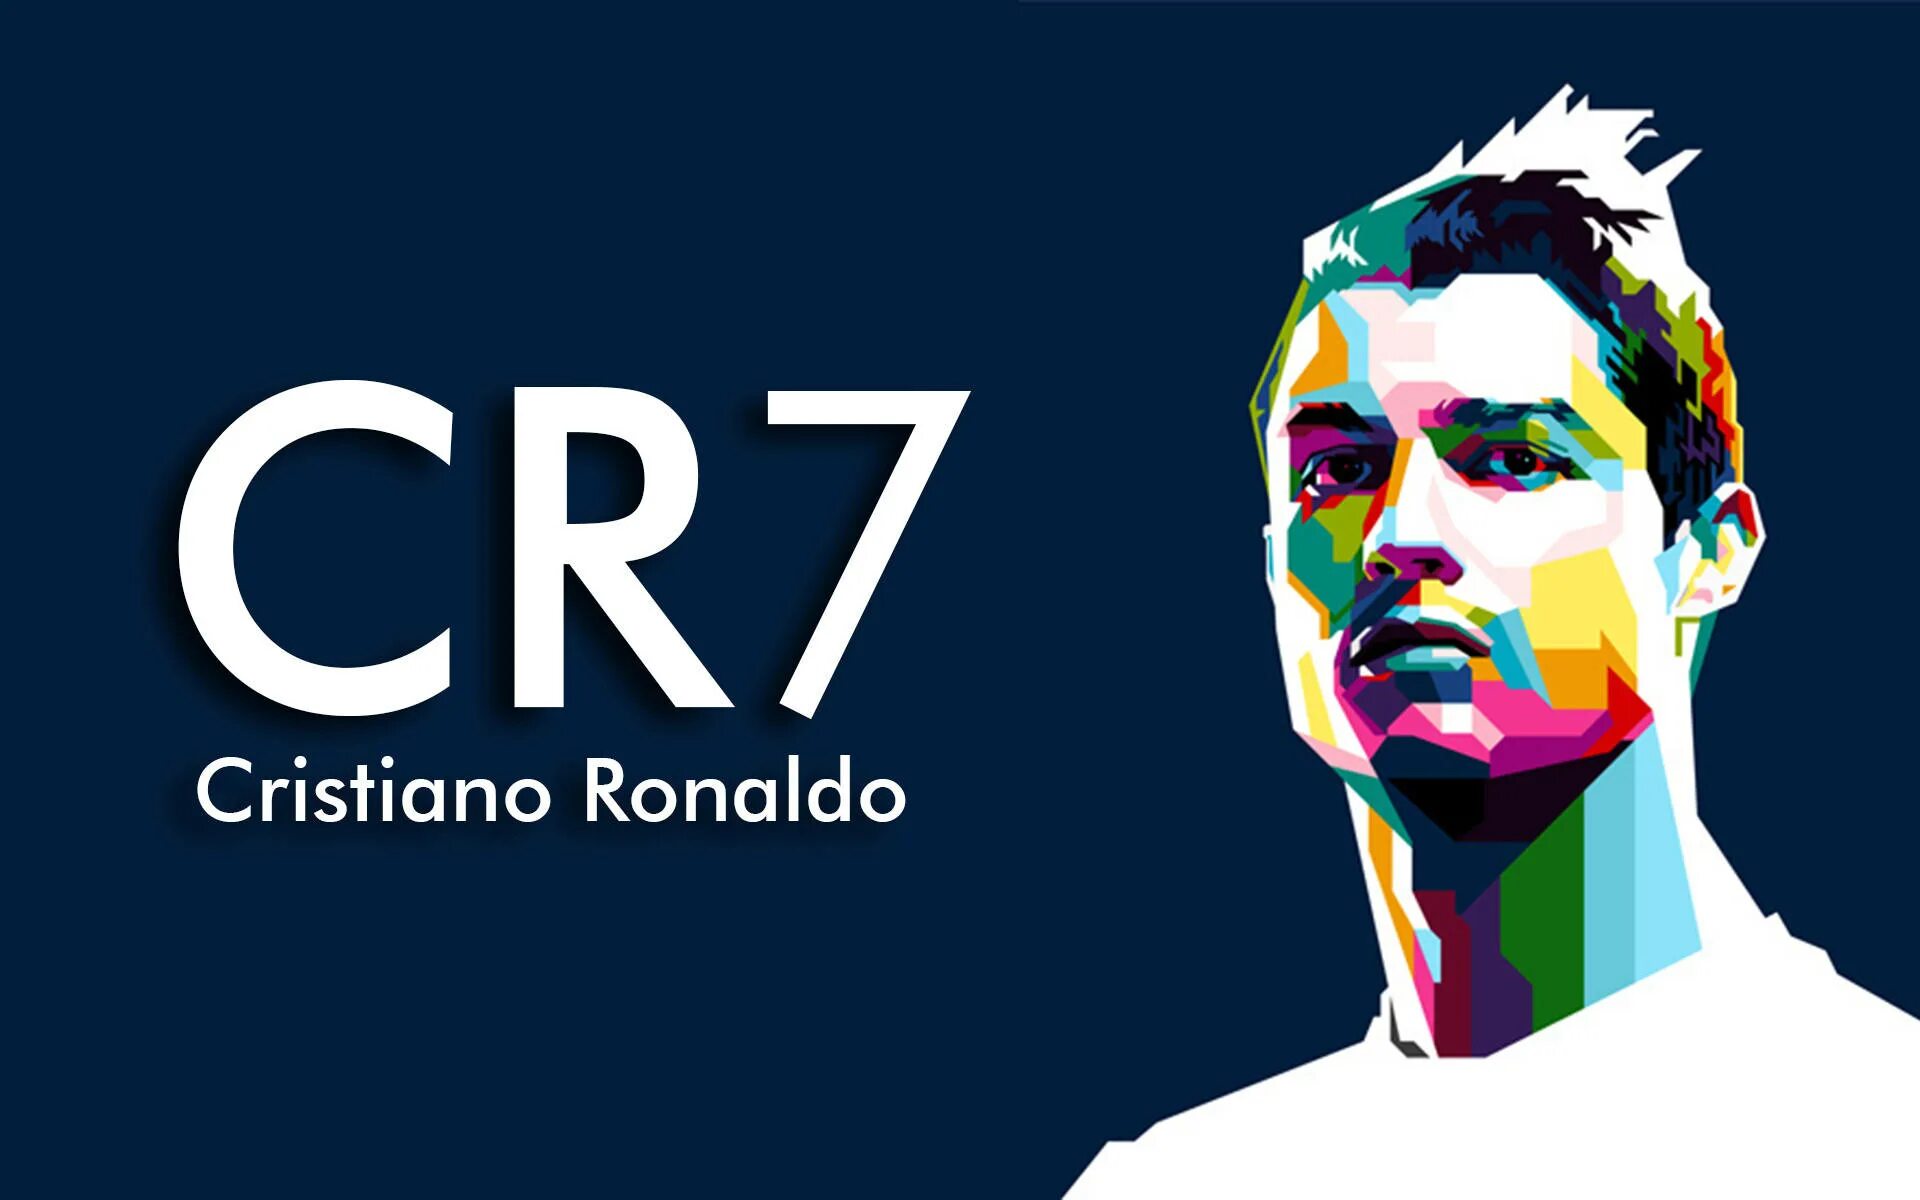 Cr7 лого. Роналду cr7. Роналдо 7. Логотип Криштиану Роналду. Спонсор 7 букв